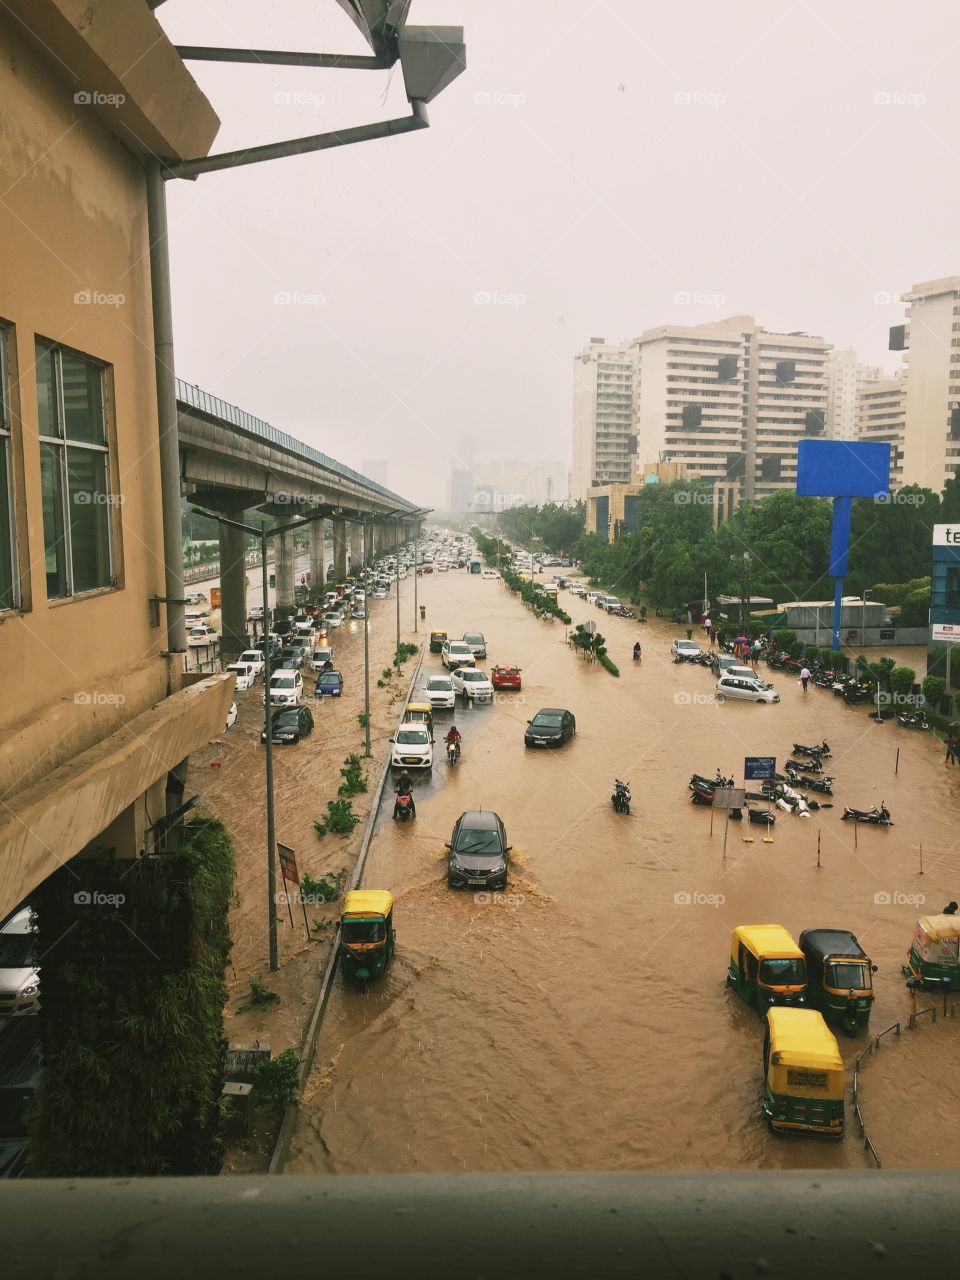 Flood in Gurgaon city in just a 1 hour heavy rain.